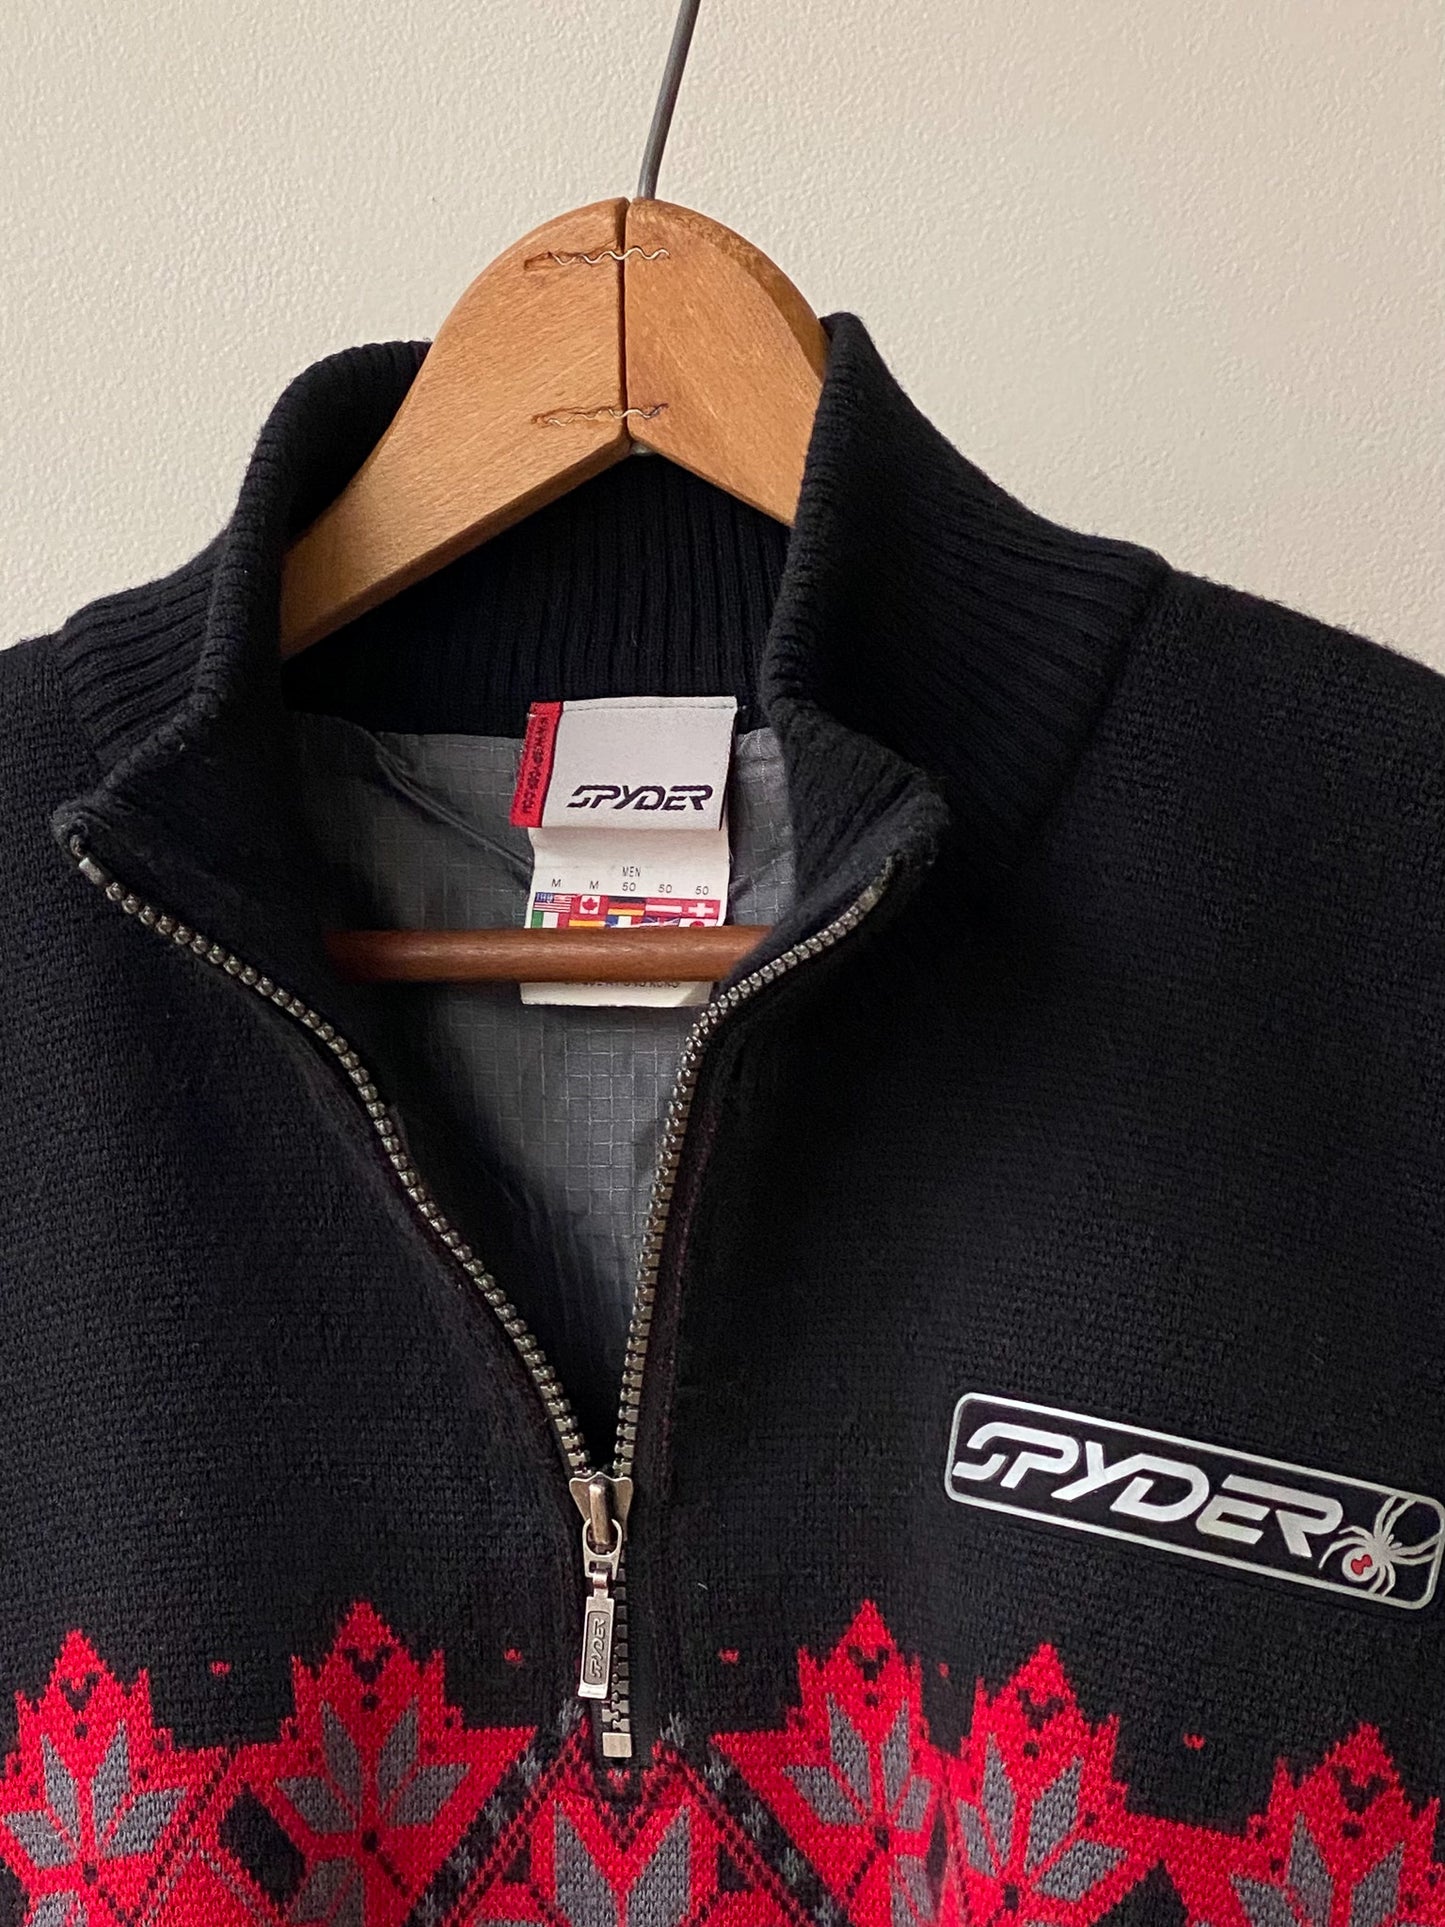 Spyder Insulated Wool Ski Sweater—[M/L]